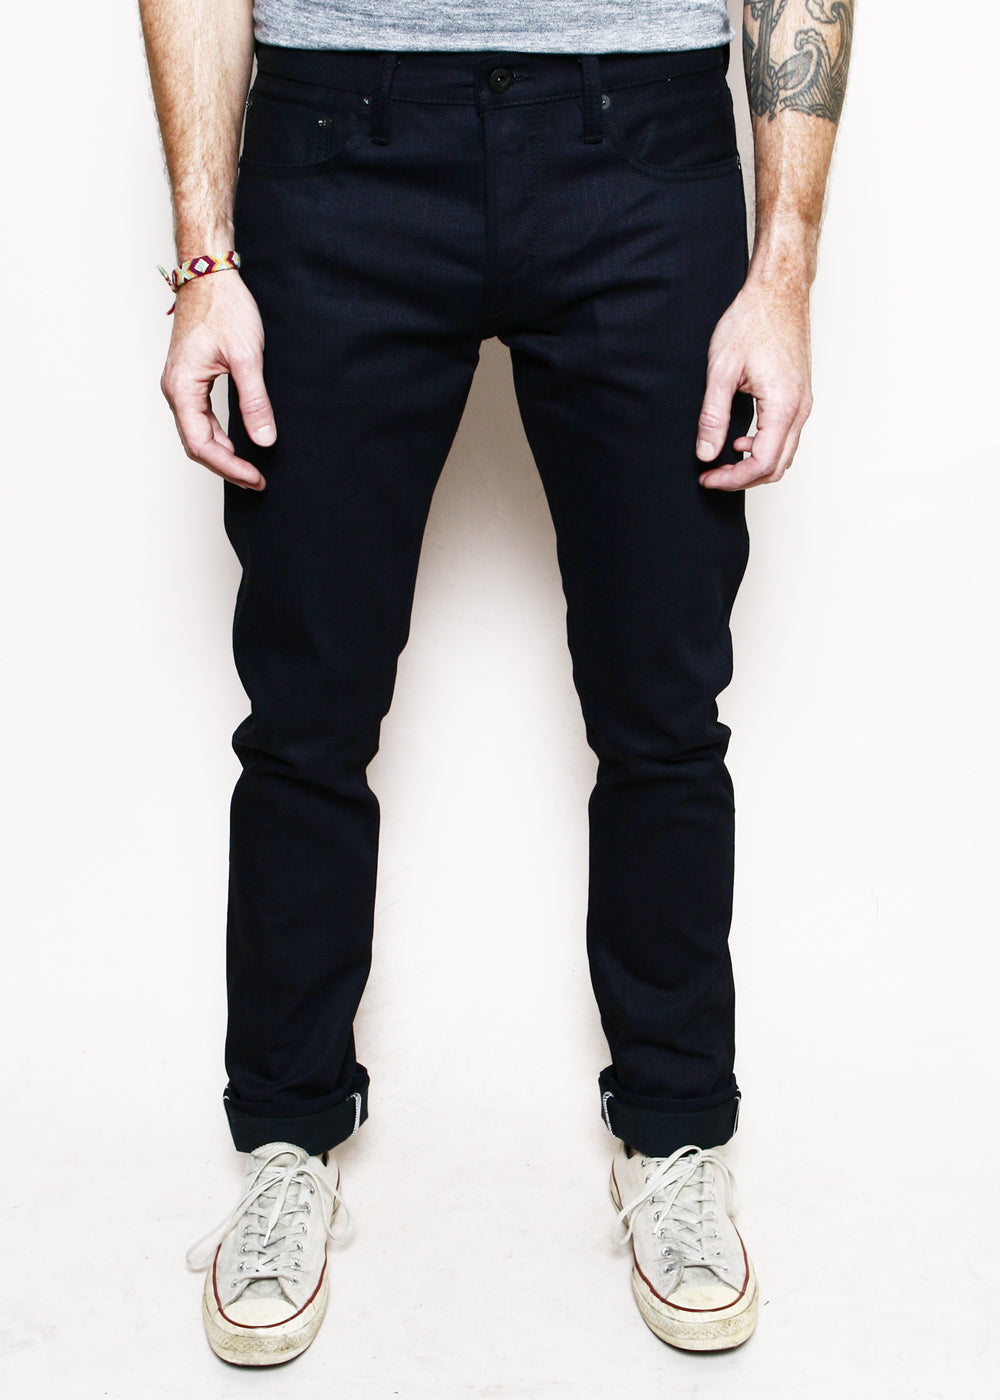 h&m capri jeans